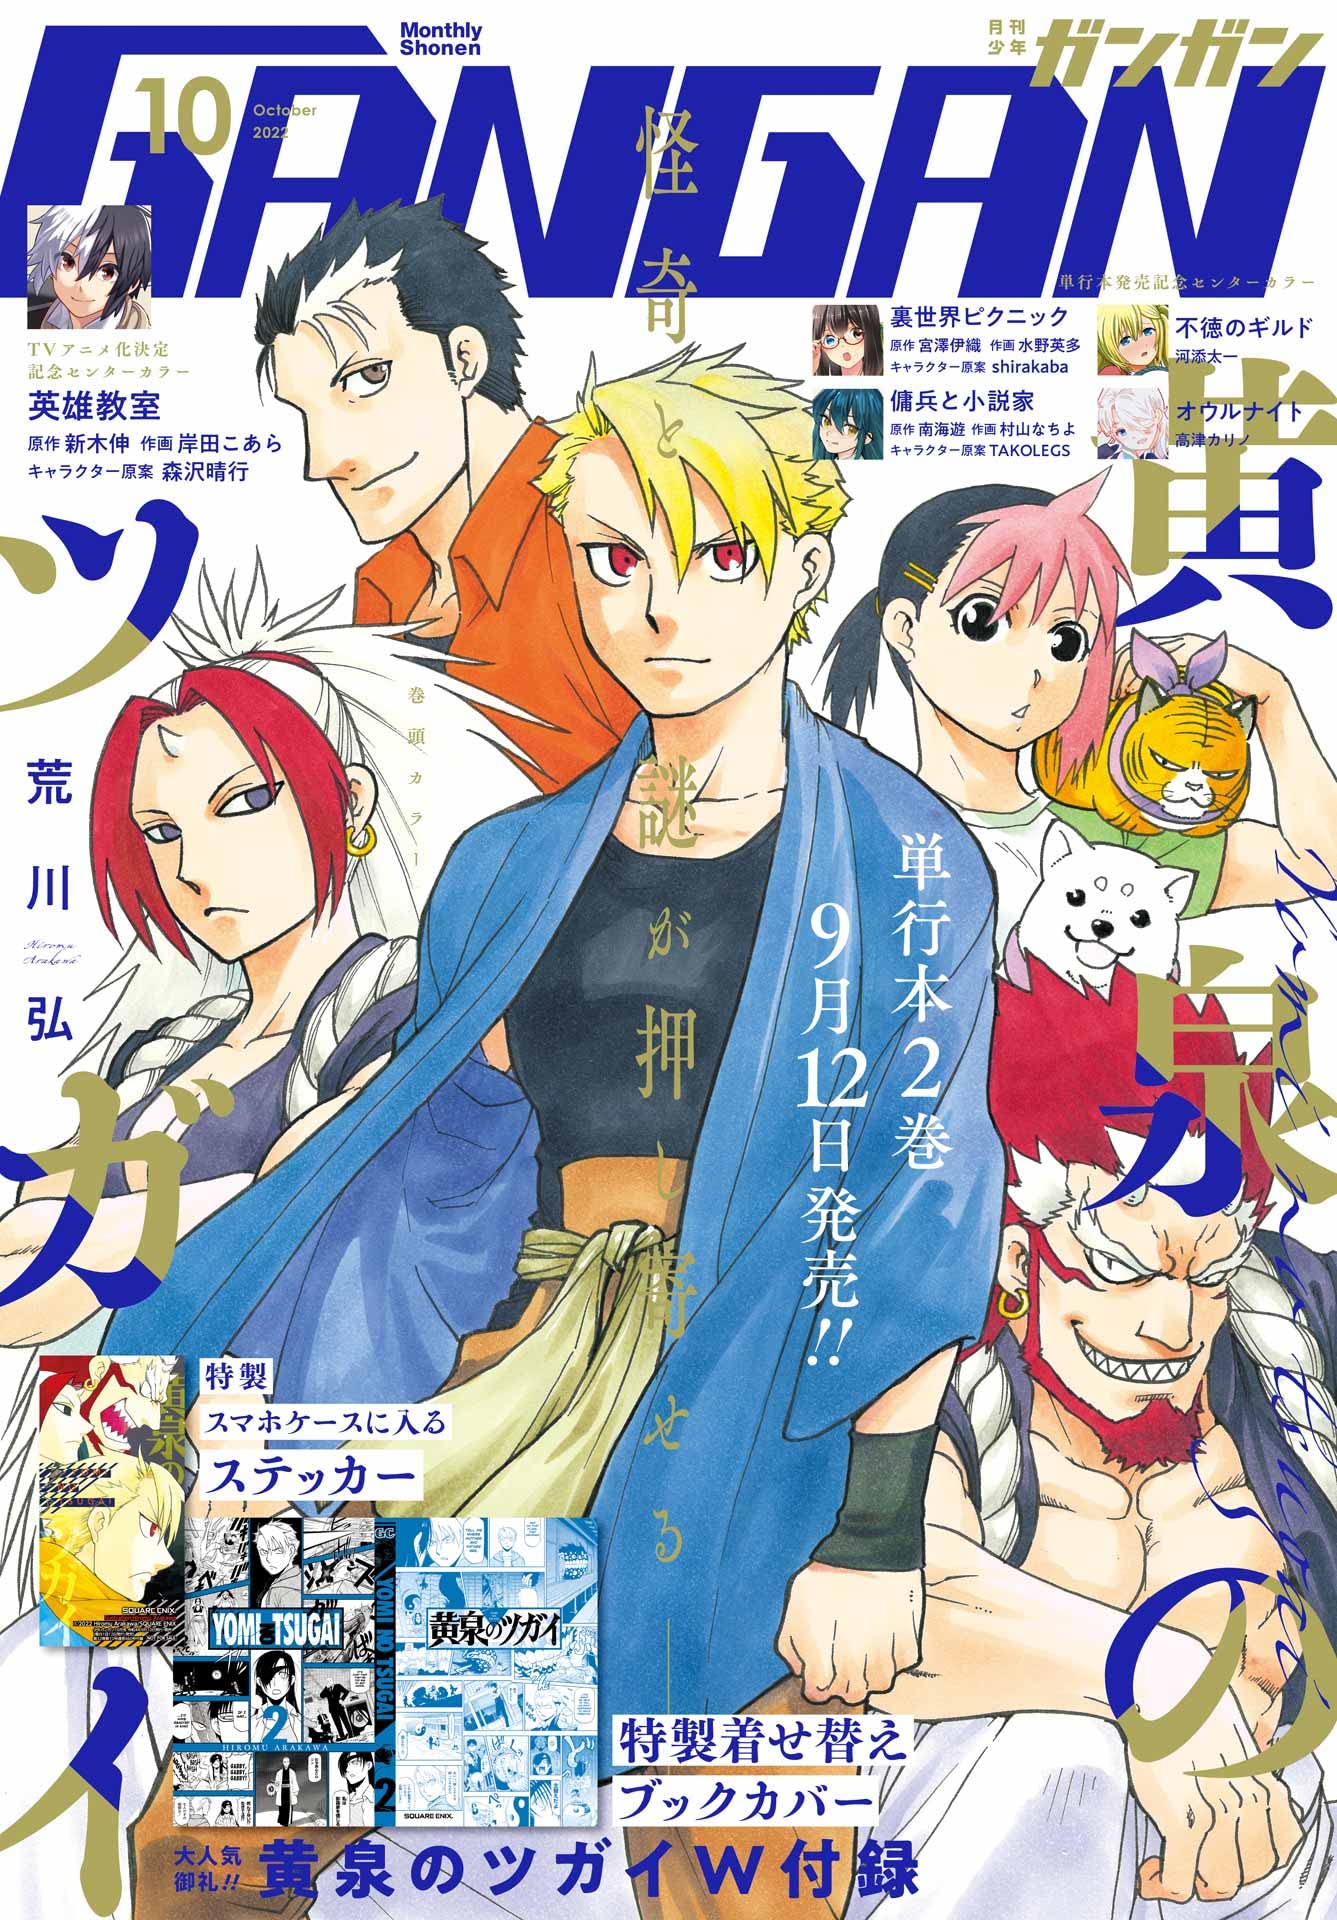 Manga Mogura RE on X: Light Novel Infinite Dendrogram Vol.20 by Kaidou  Sakon, Taiki English release @jnovelclub  / X